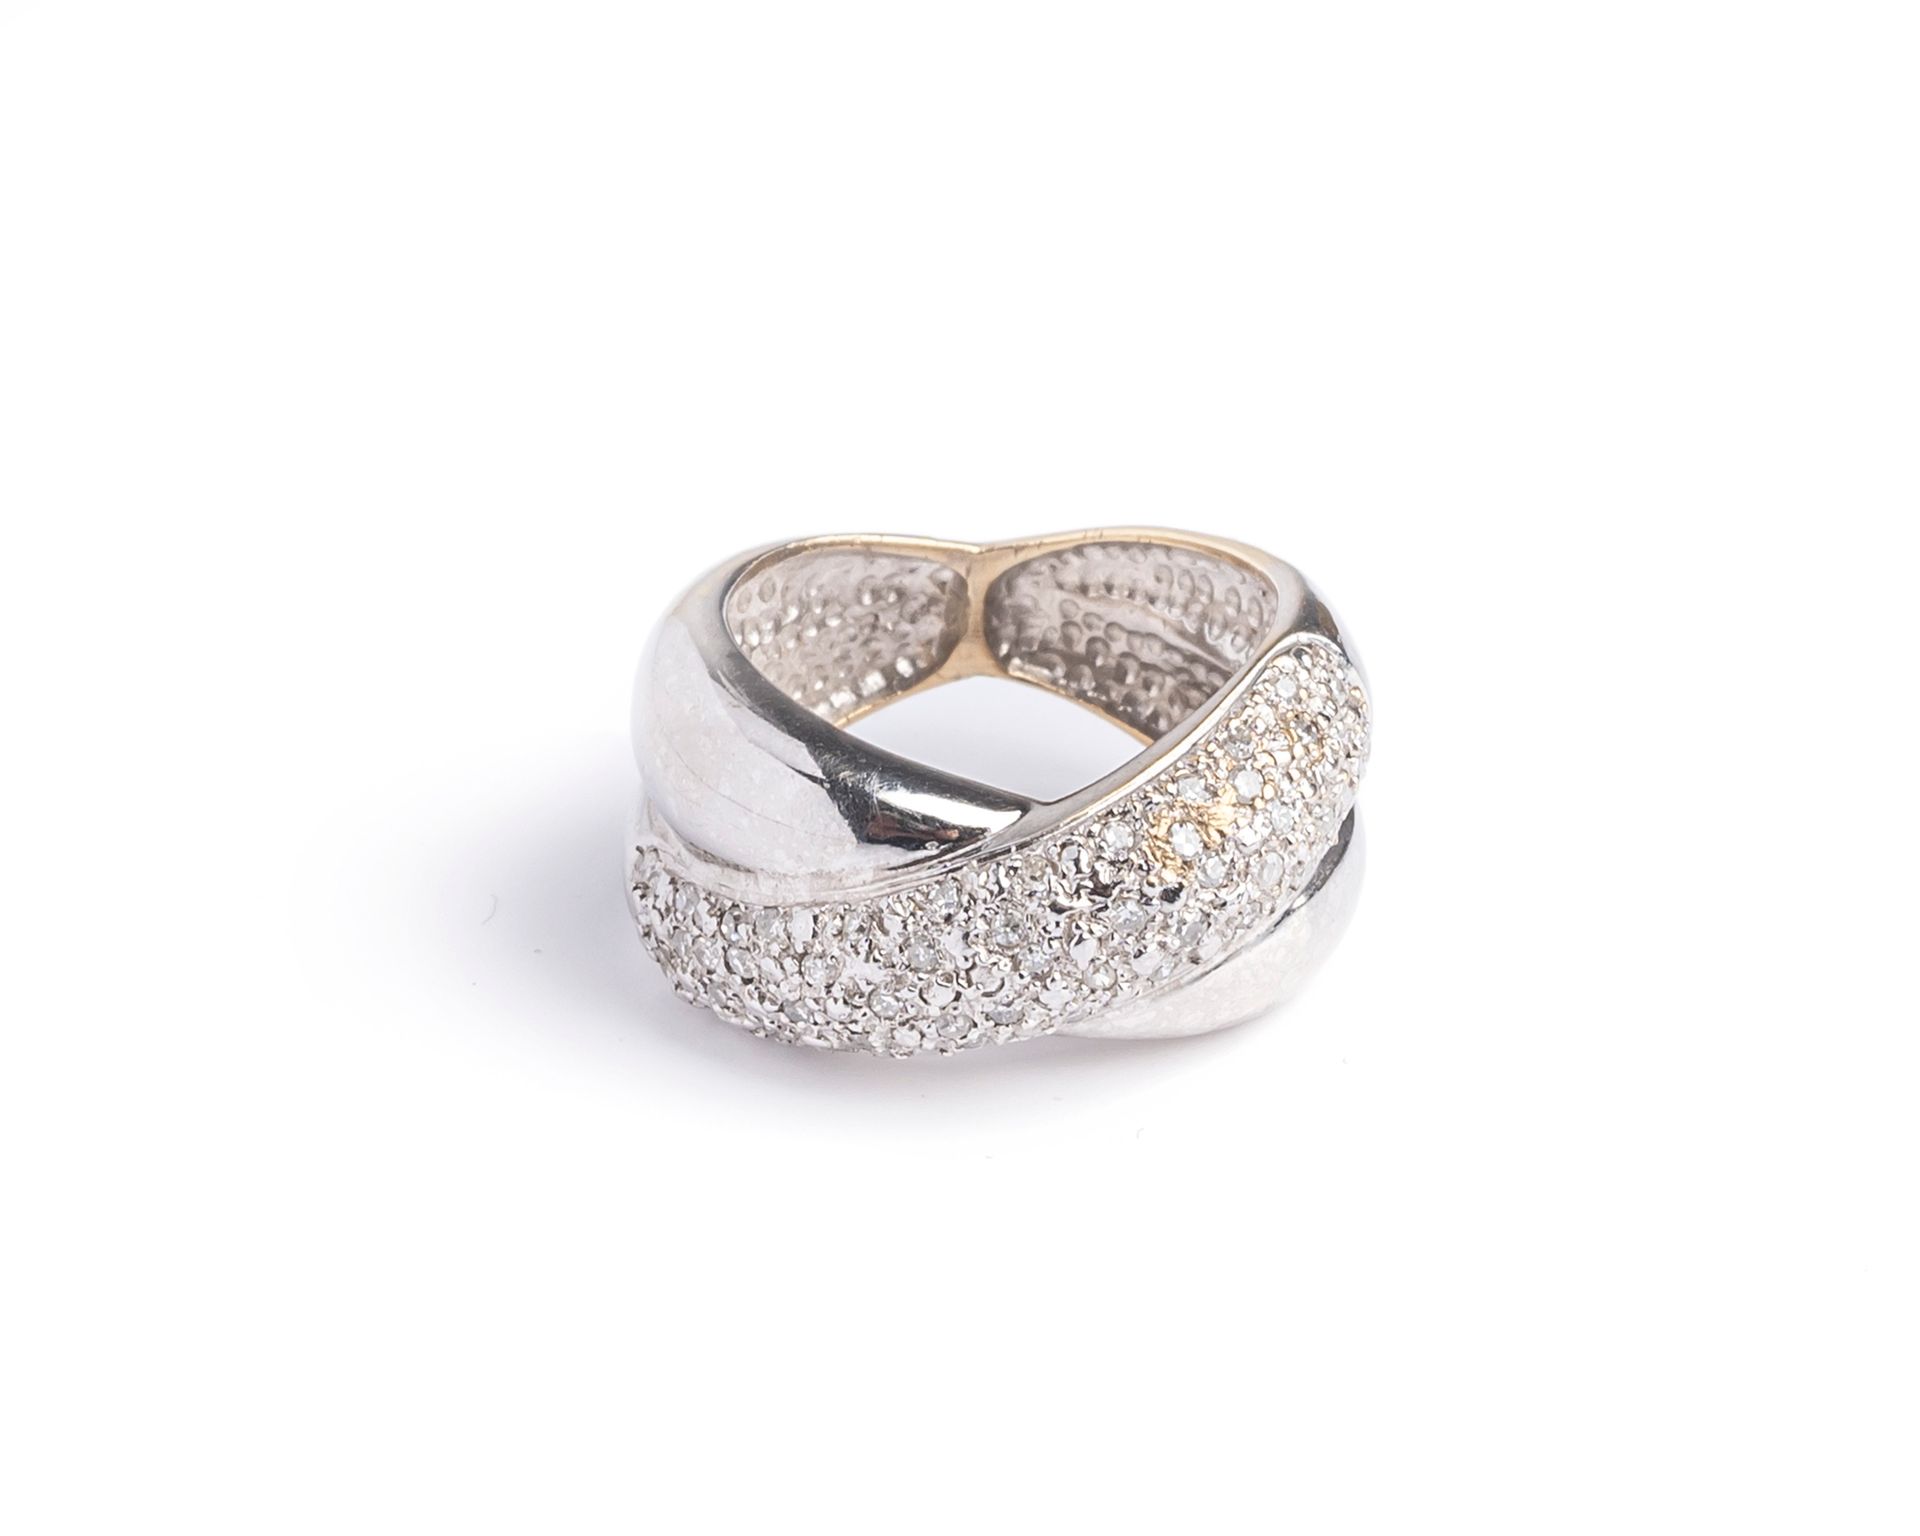 Null 双色18K（千分之七十五）黄金十字架戒指，戒指上铺设了明亮型切割钻石，采用种子镶嵌方式
手指尺寸 : 48
毛重 : 6,3 g.